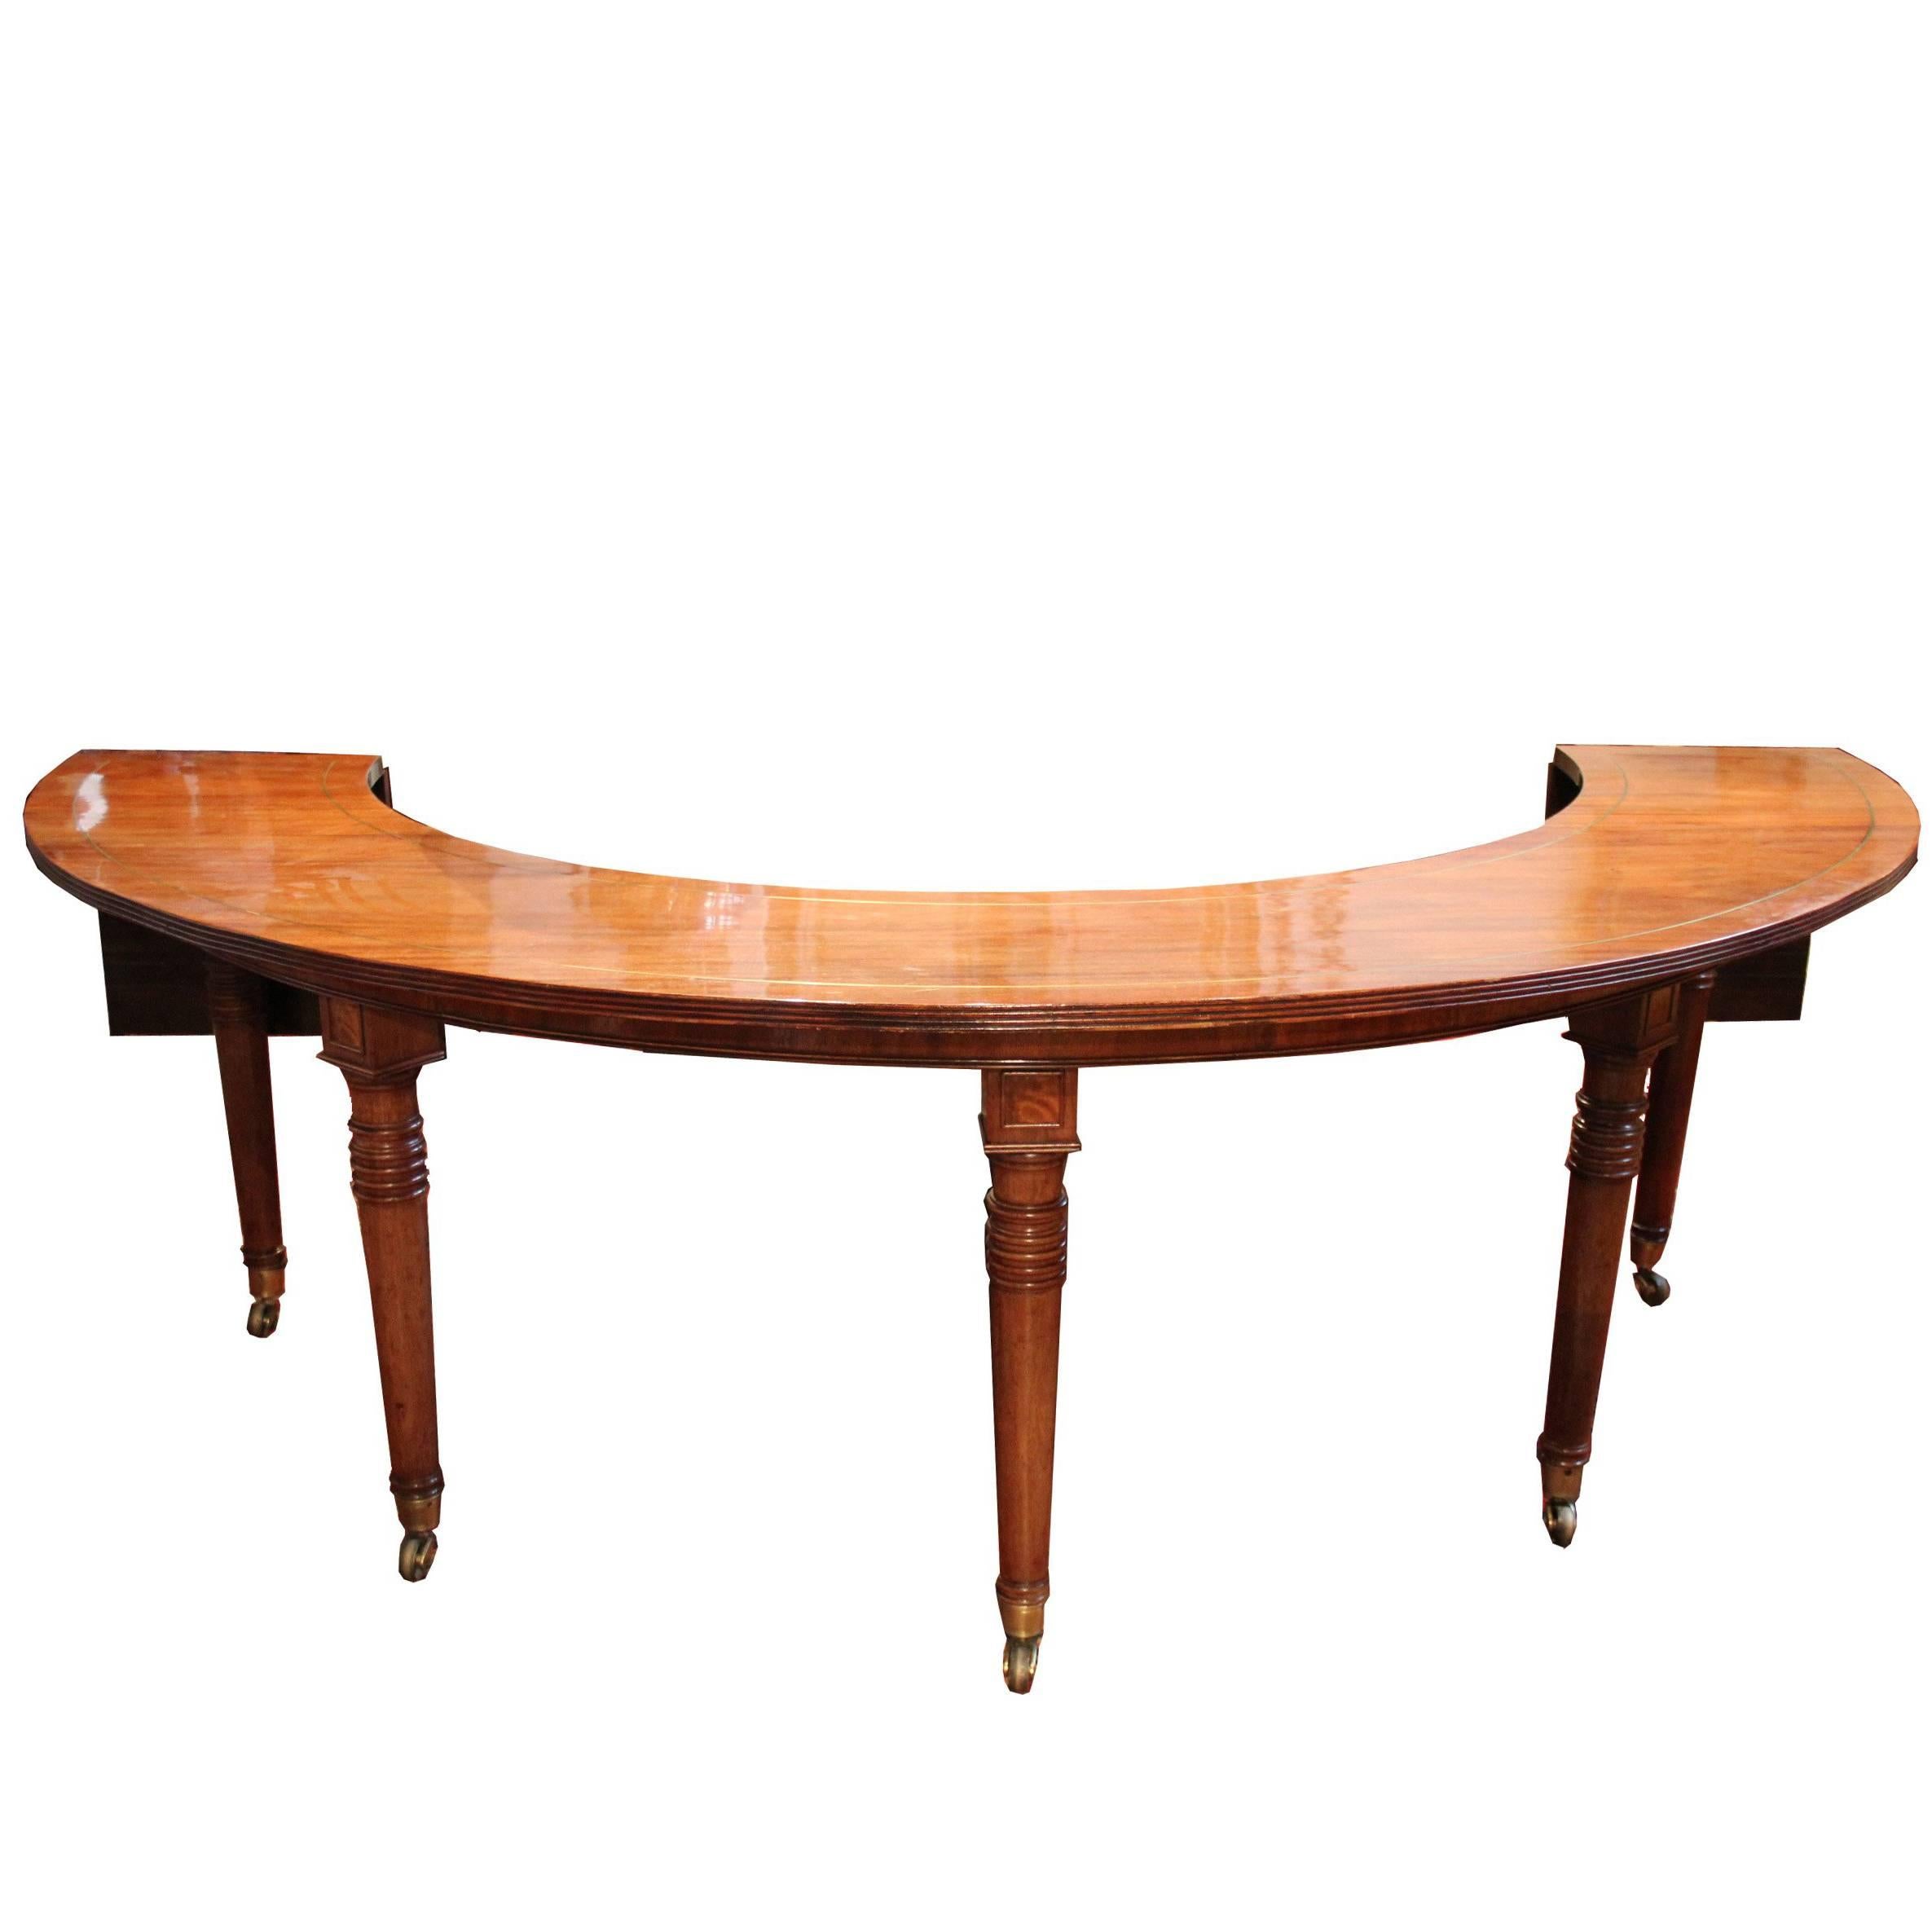 19th Century English Regency Semi-Circular Mahogany Hunt and Wine Display Table For Sale